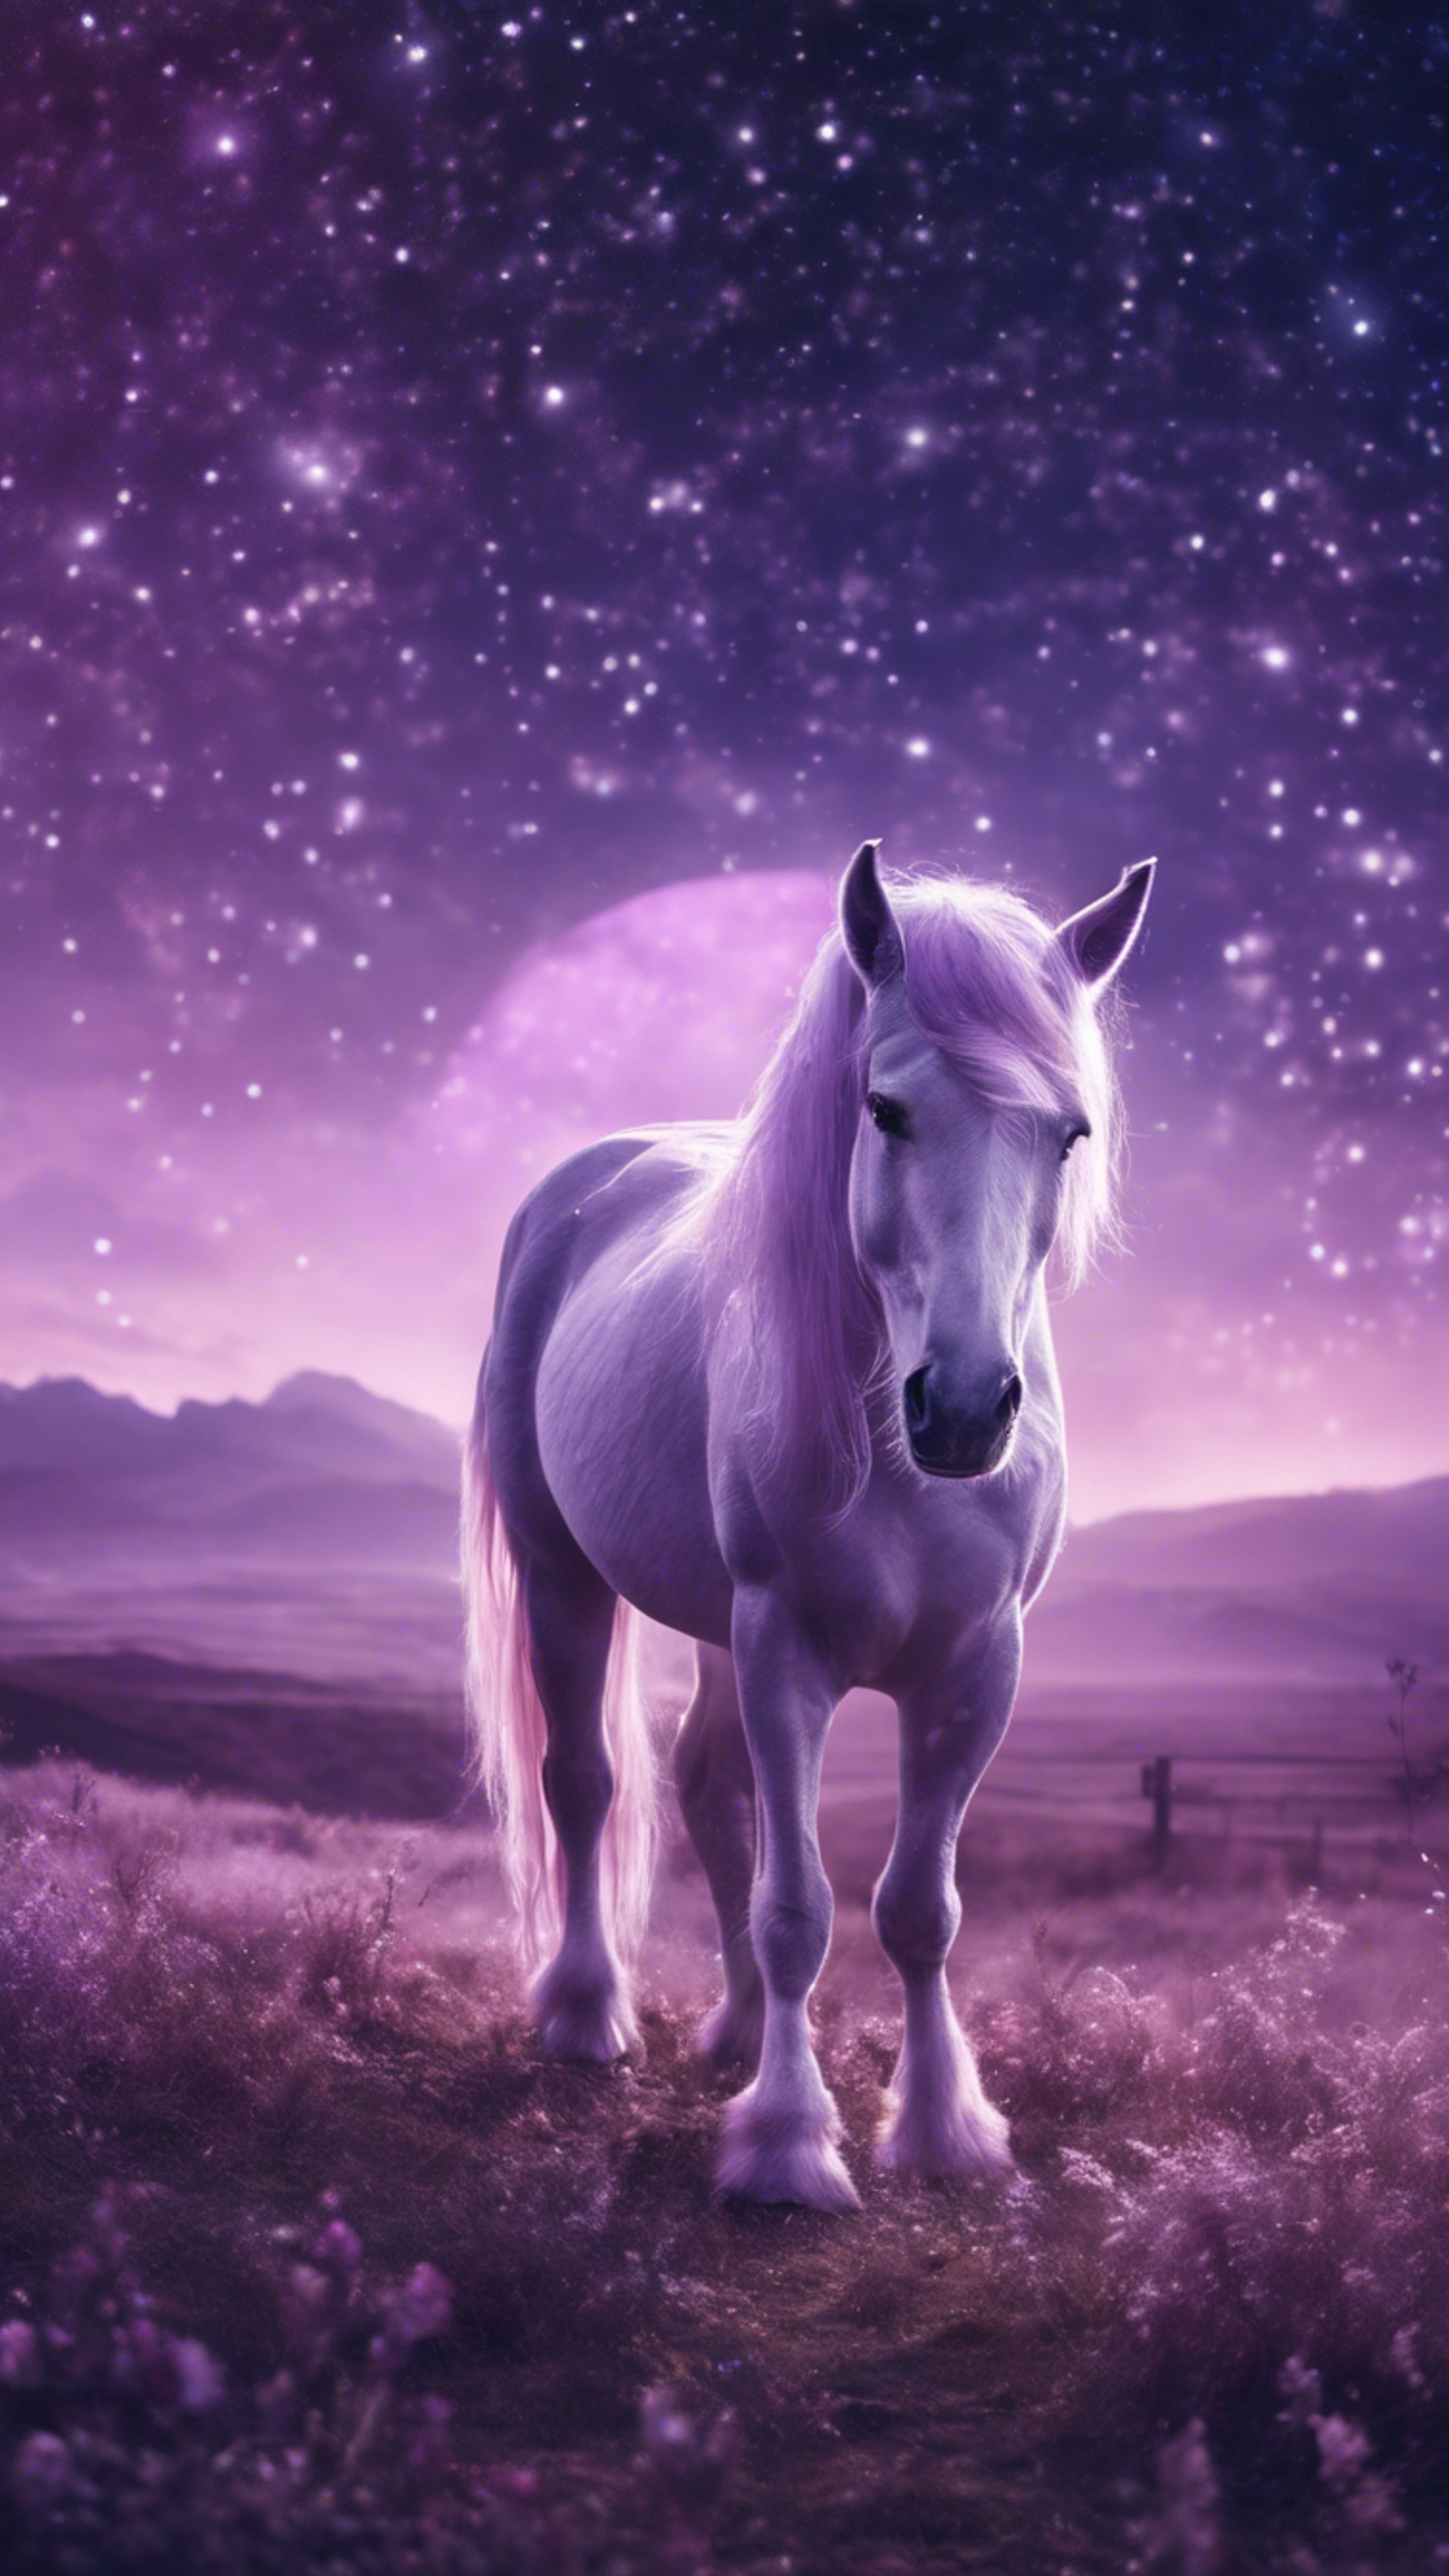 A light purple unicorn grazing in a mystical landscape under the starry night. Hintergrund[ebdebf087ad14a189ba8]